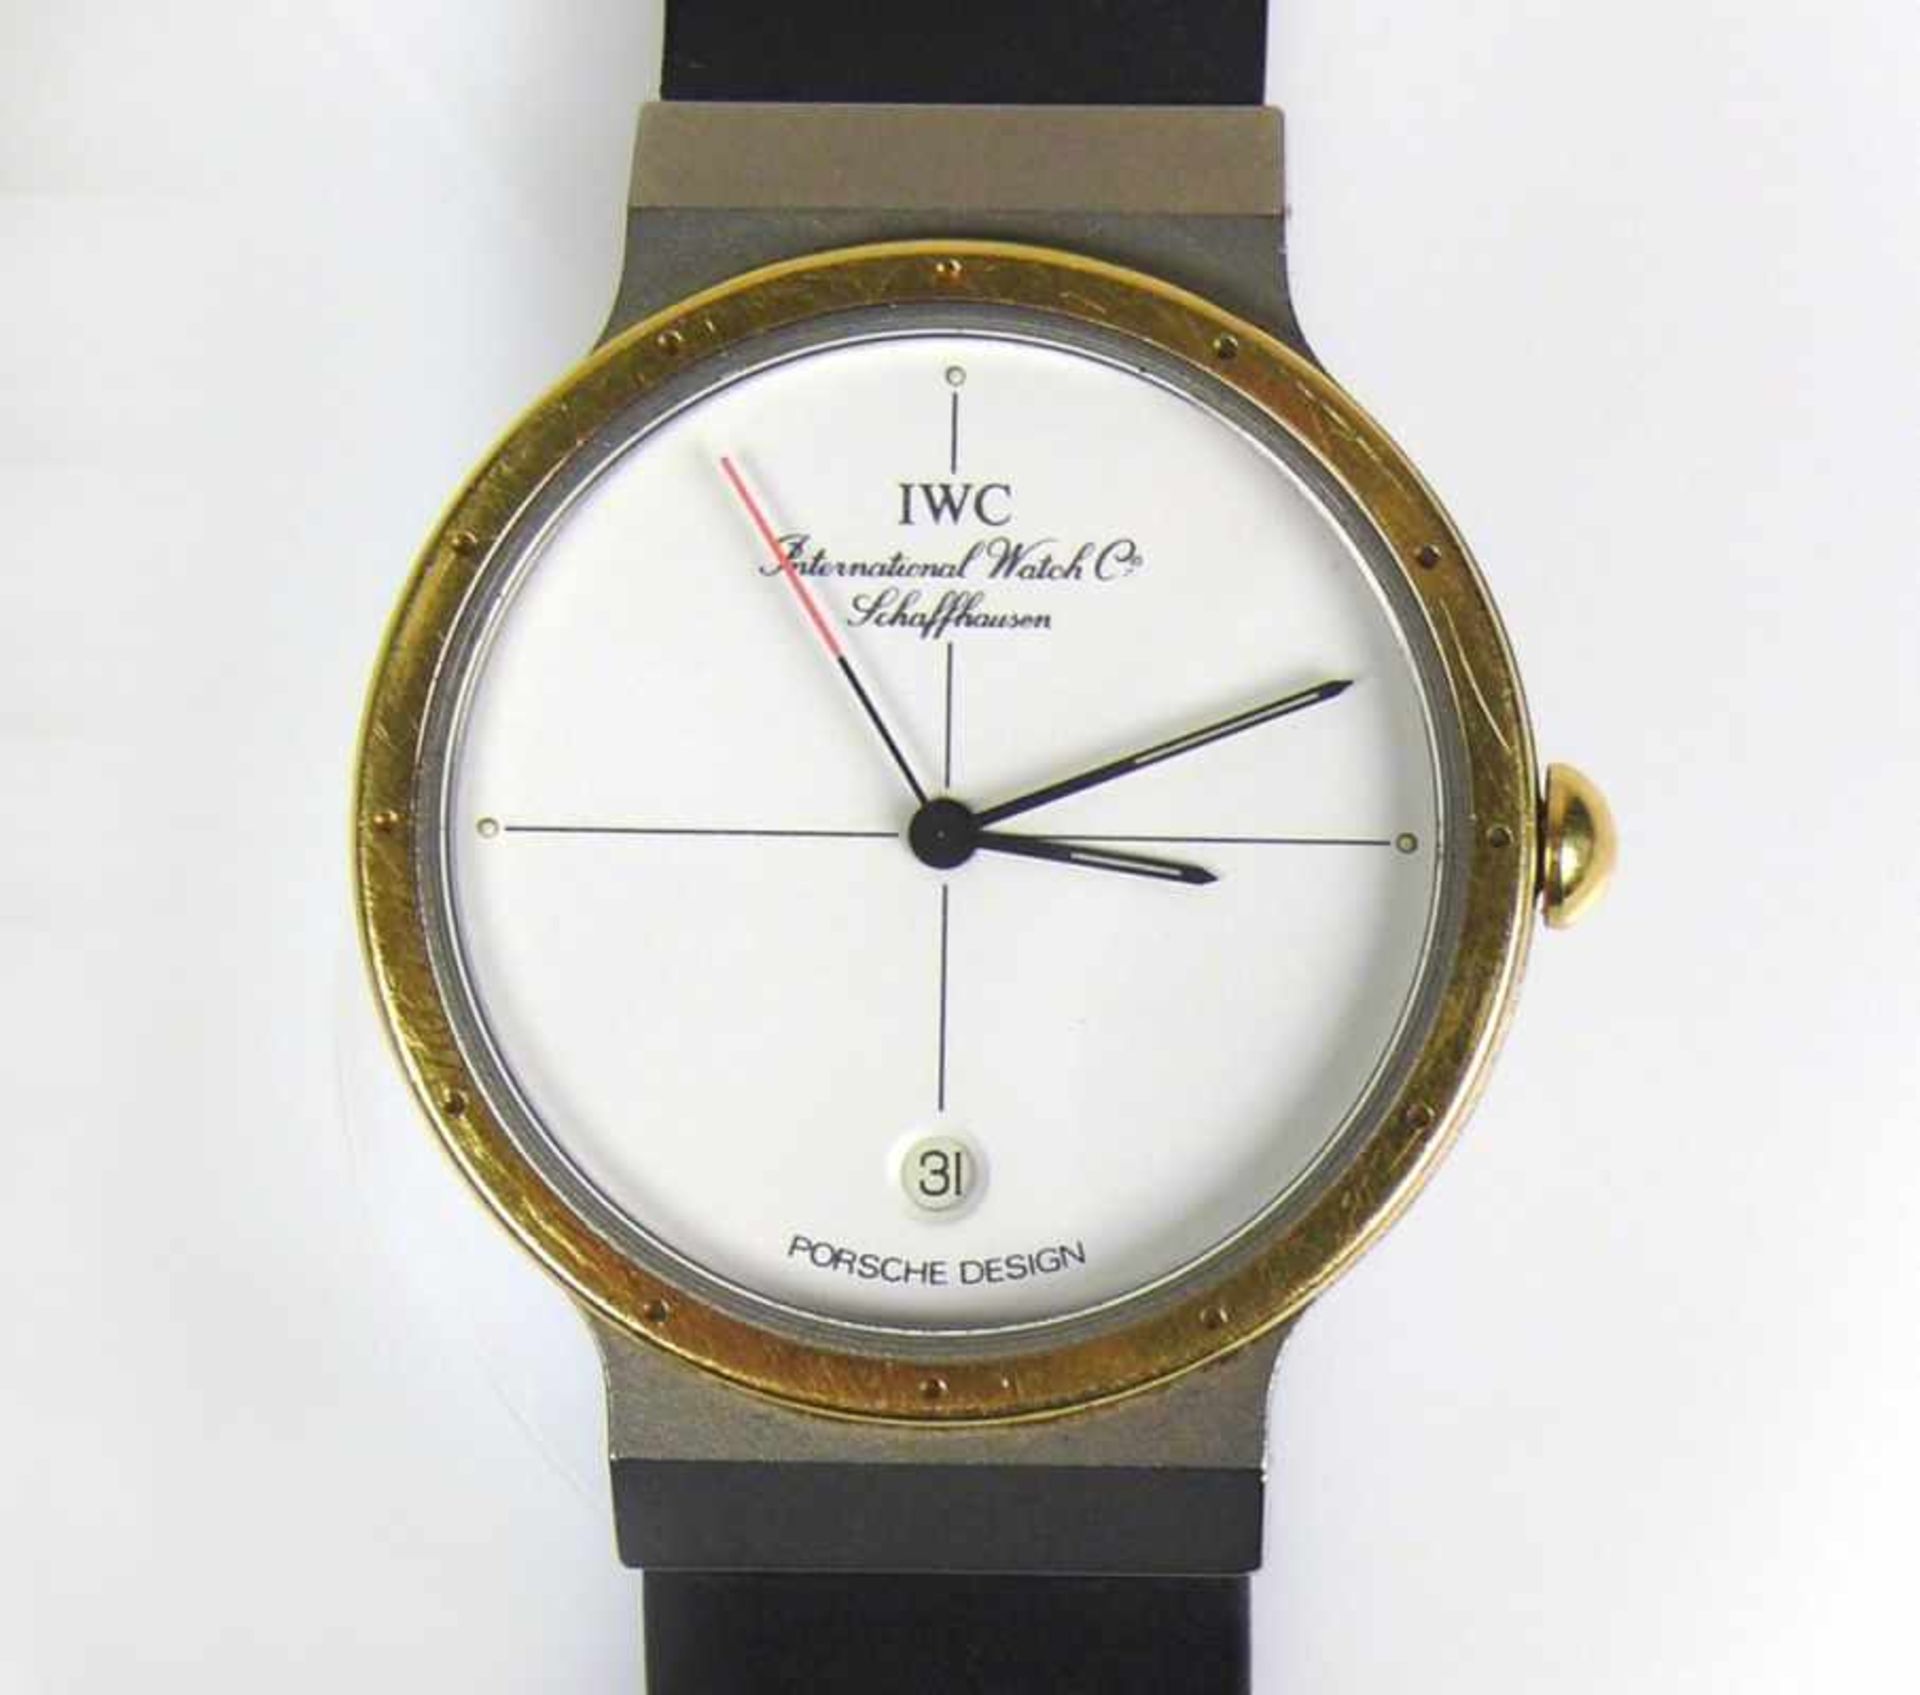 IWC-Armbanduhr PORSCHE DESIGN; Datumanzeige, Zentralsekunde; Stahl/Gold; D: Gehäuse 32 mm;